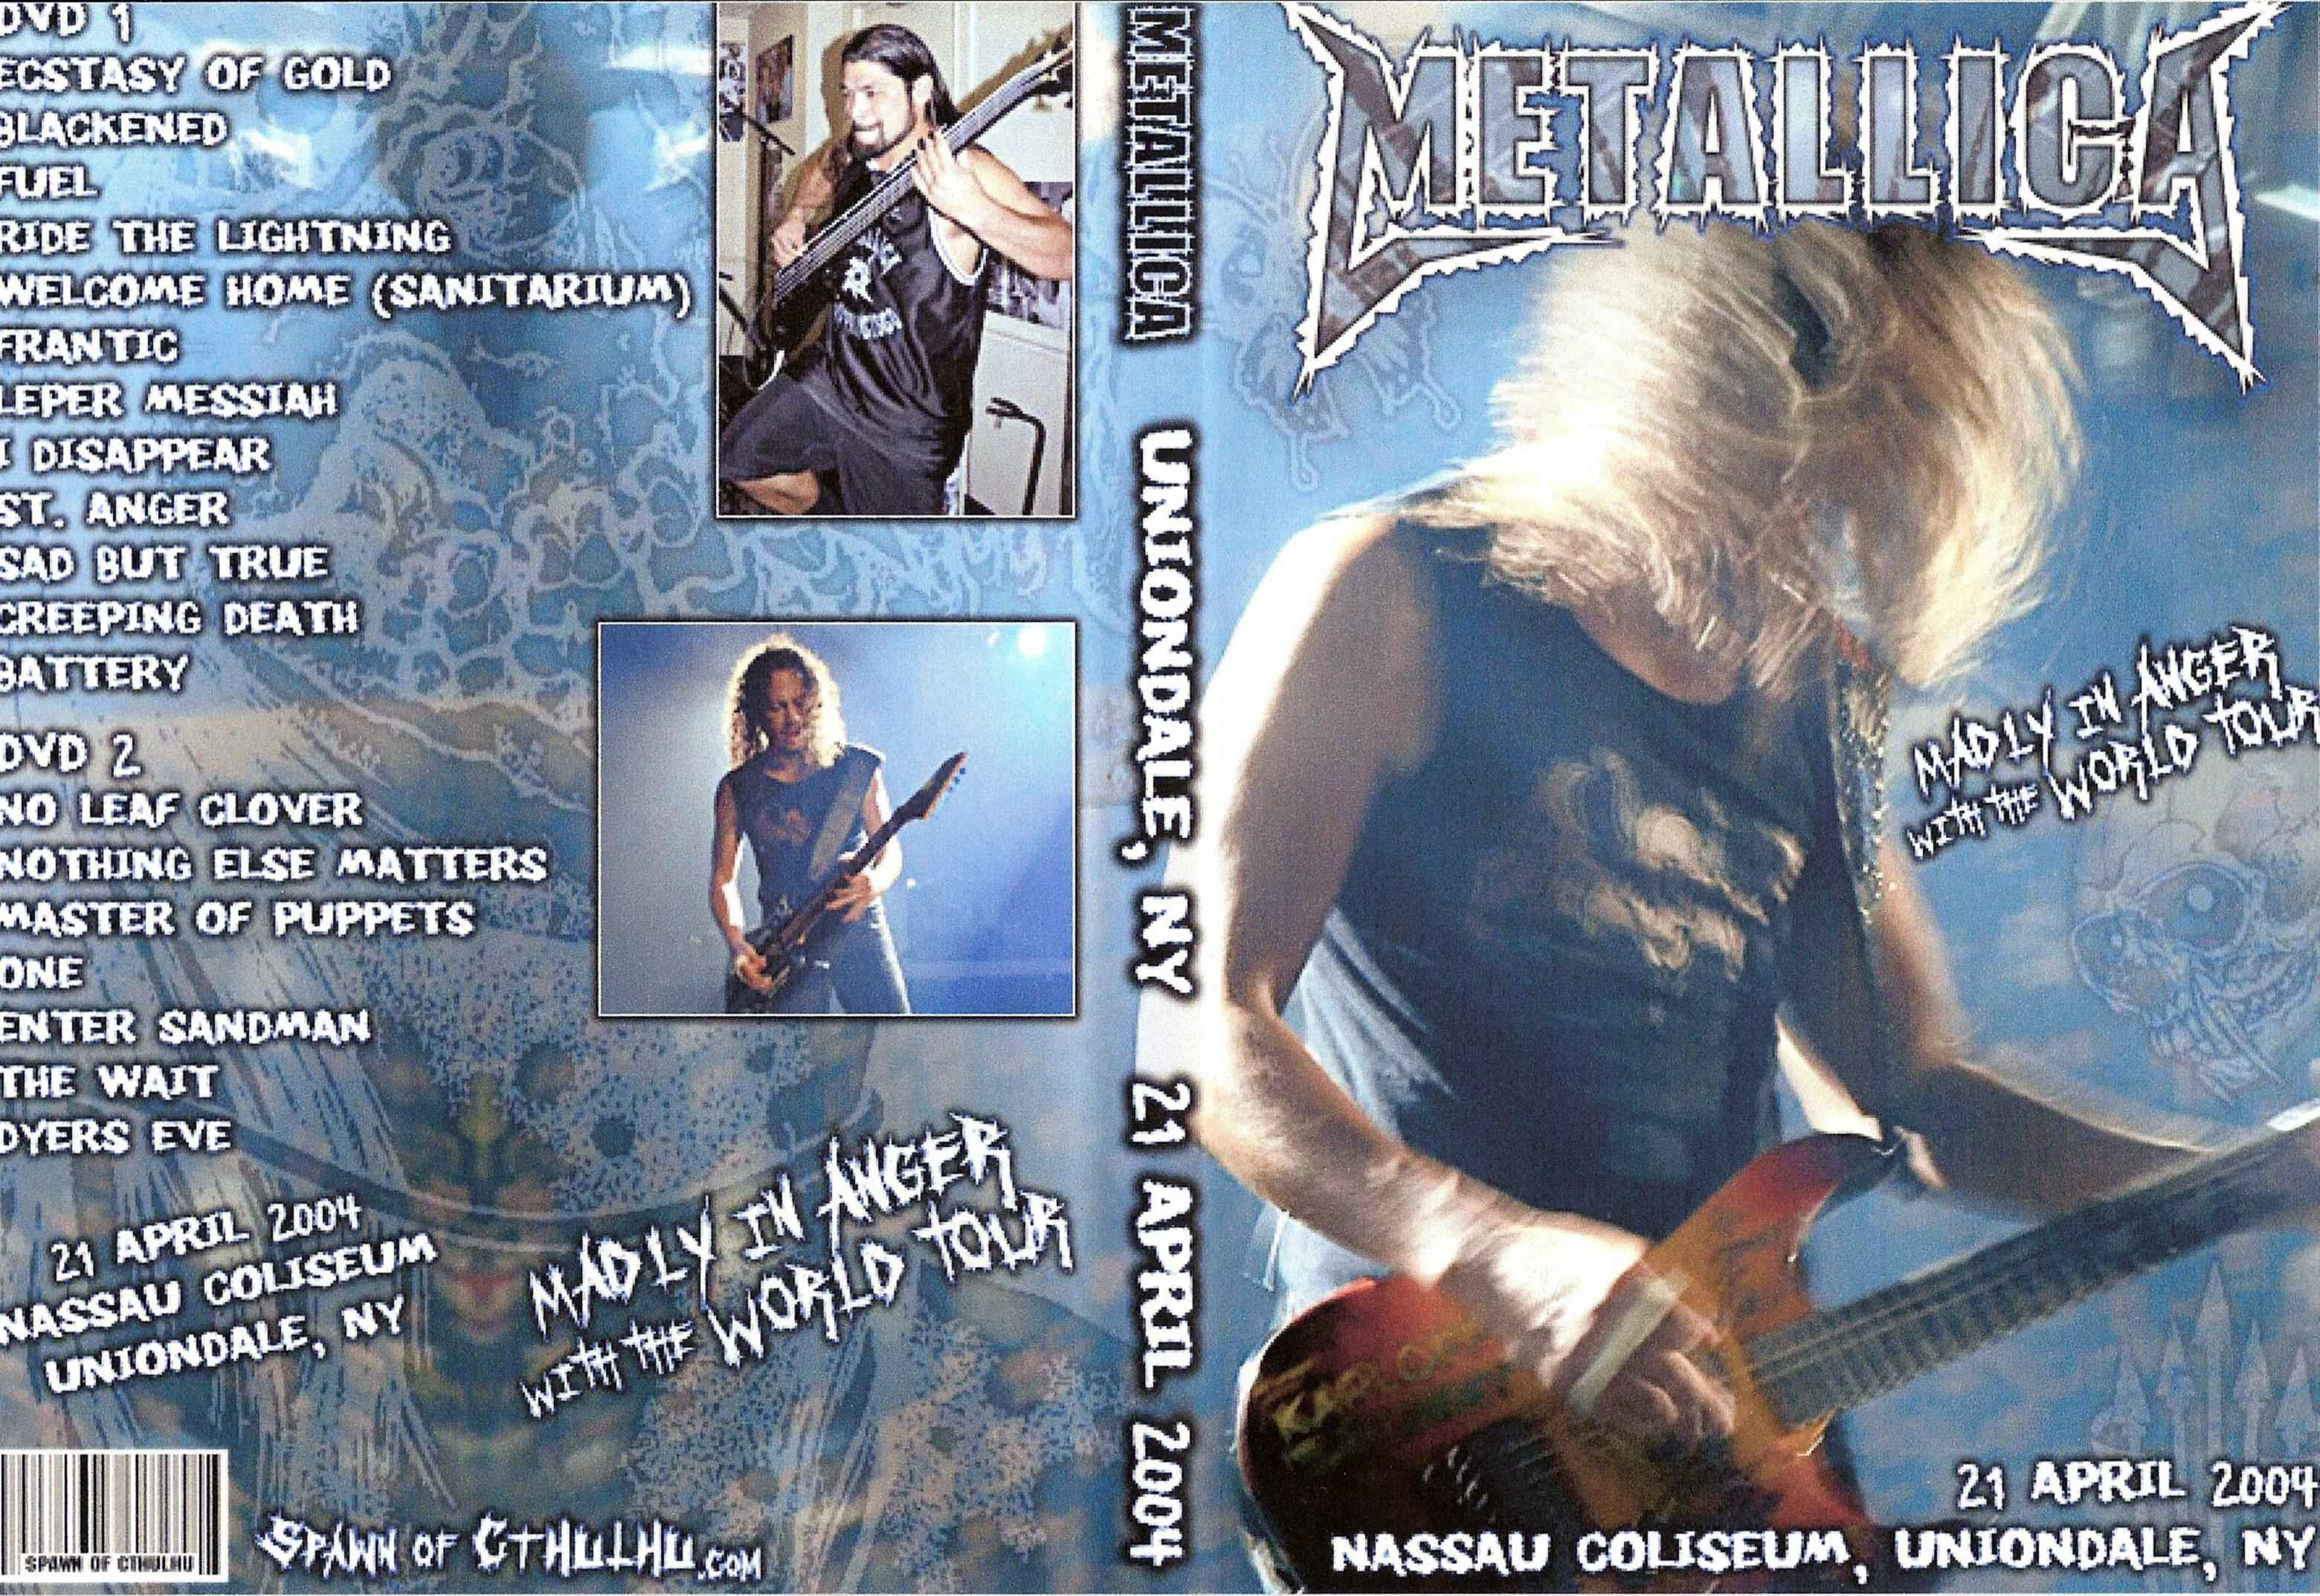 Jaquette DVD Metallica uniondale ny 21 april 2004